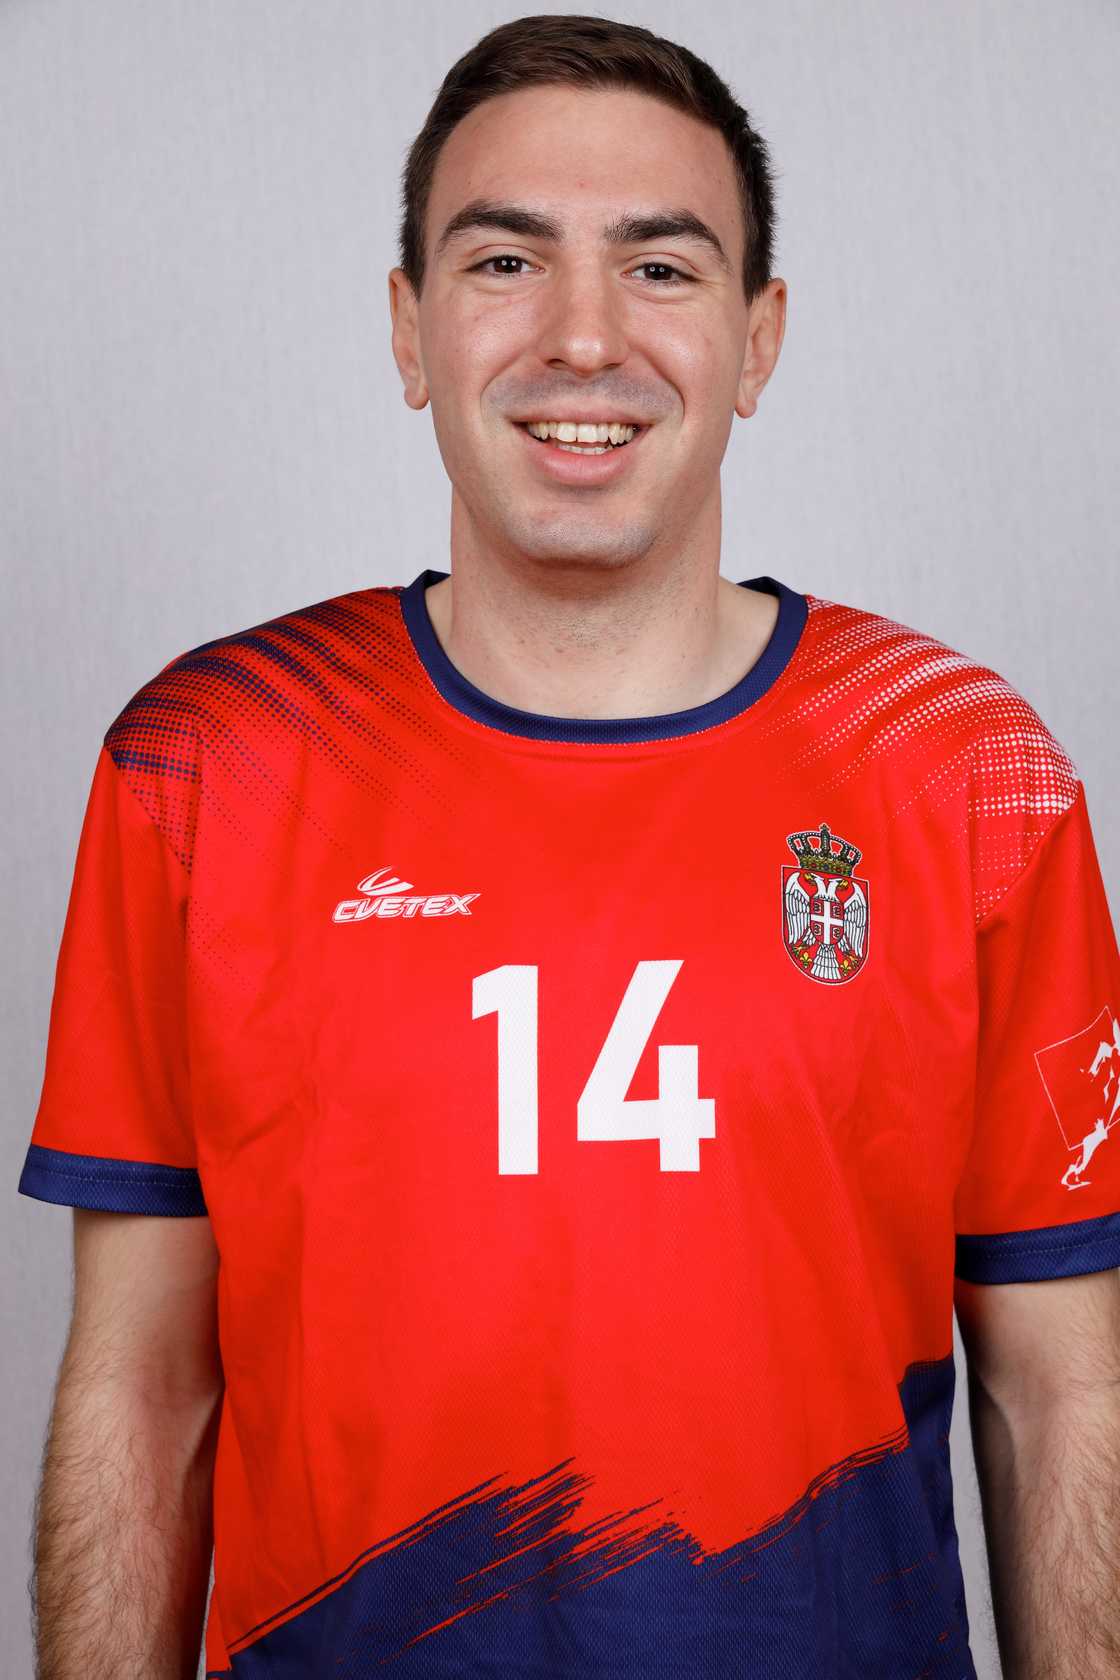 Nikola Perkovic